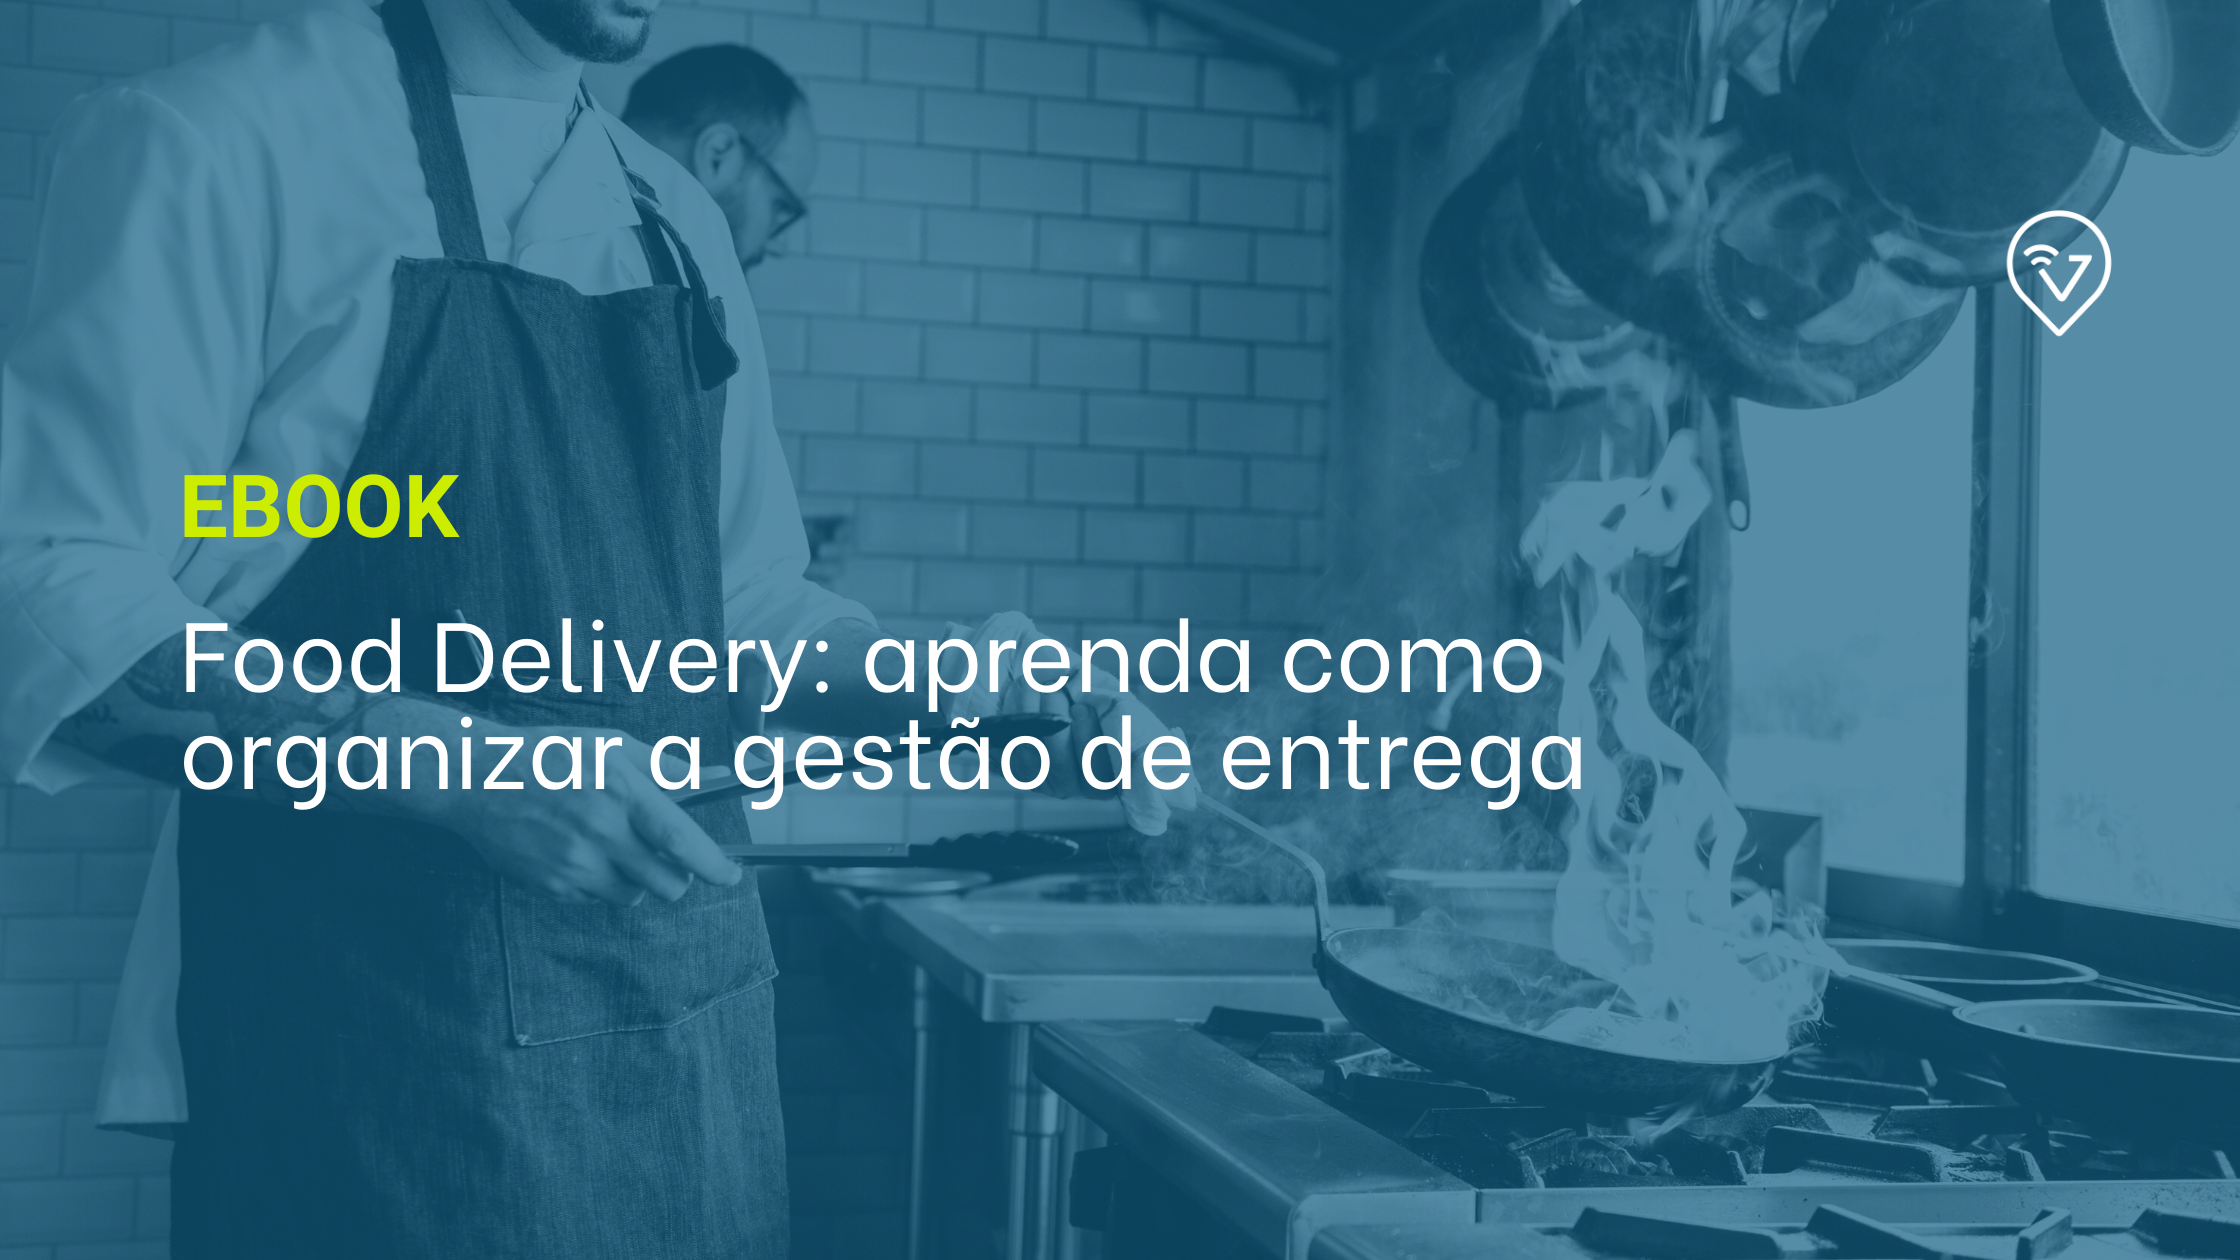 [EBOOK] Food Delivery: aprenda como organizar a gestão de entrega